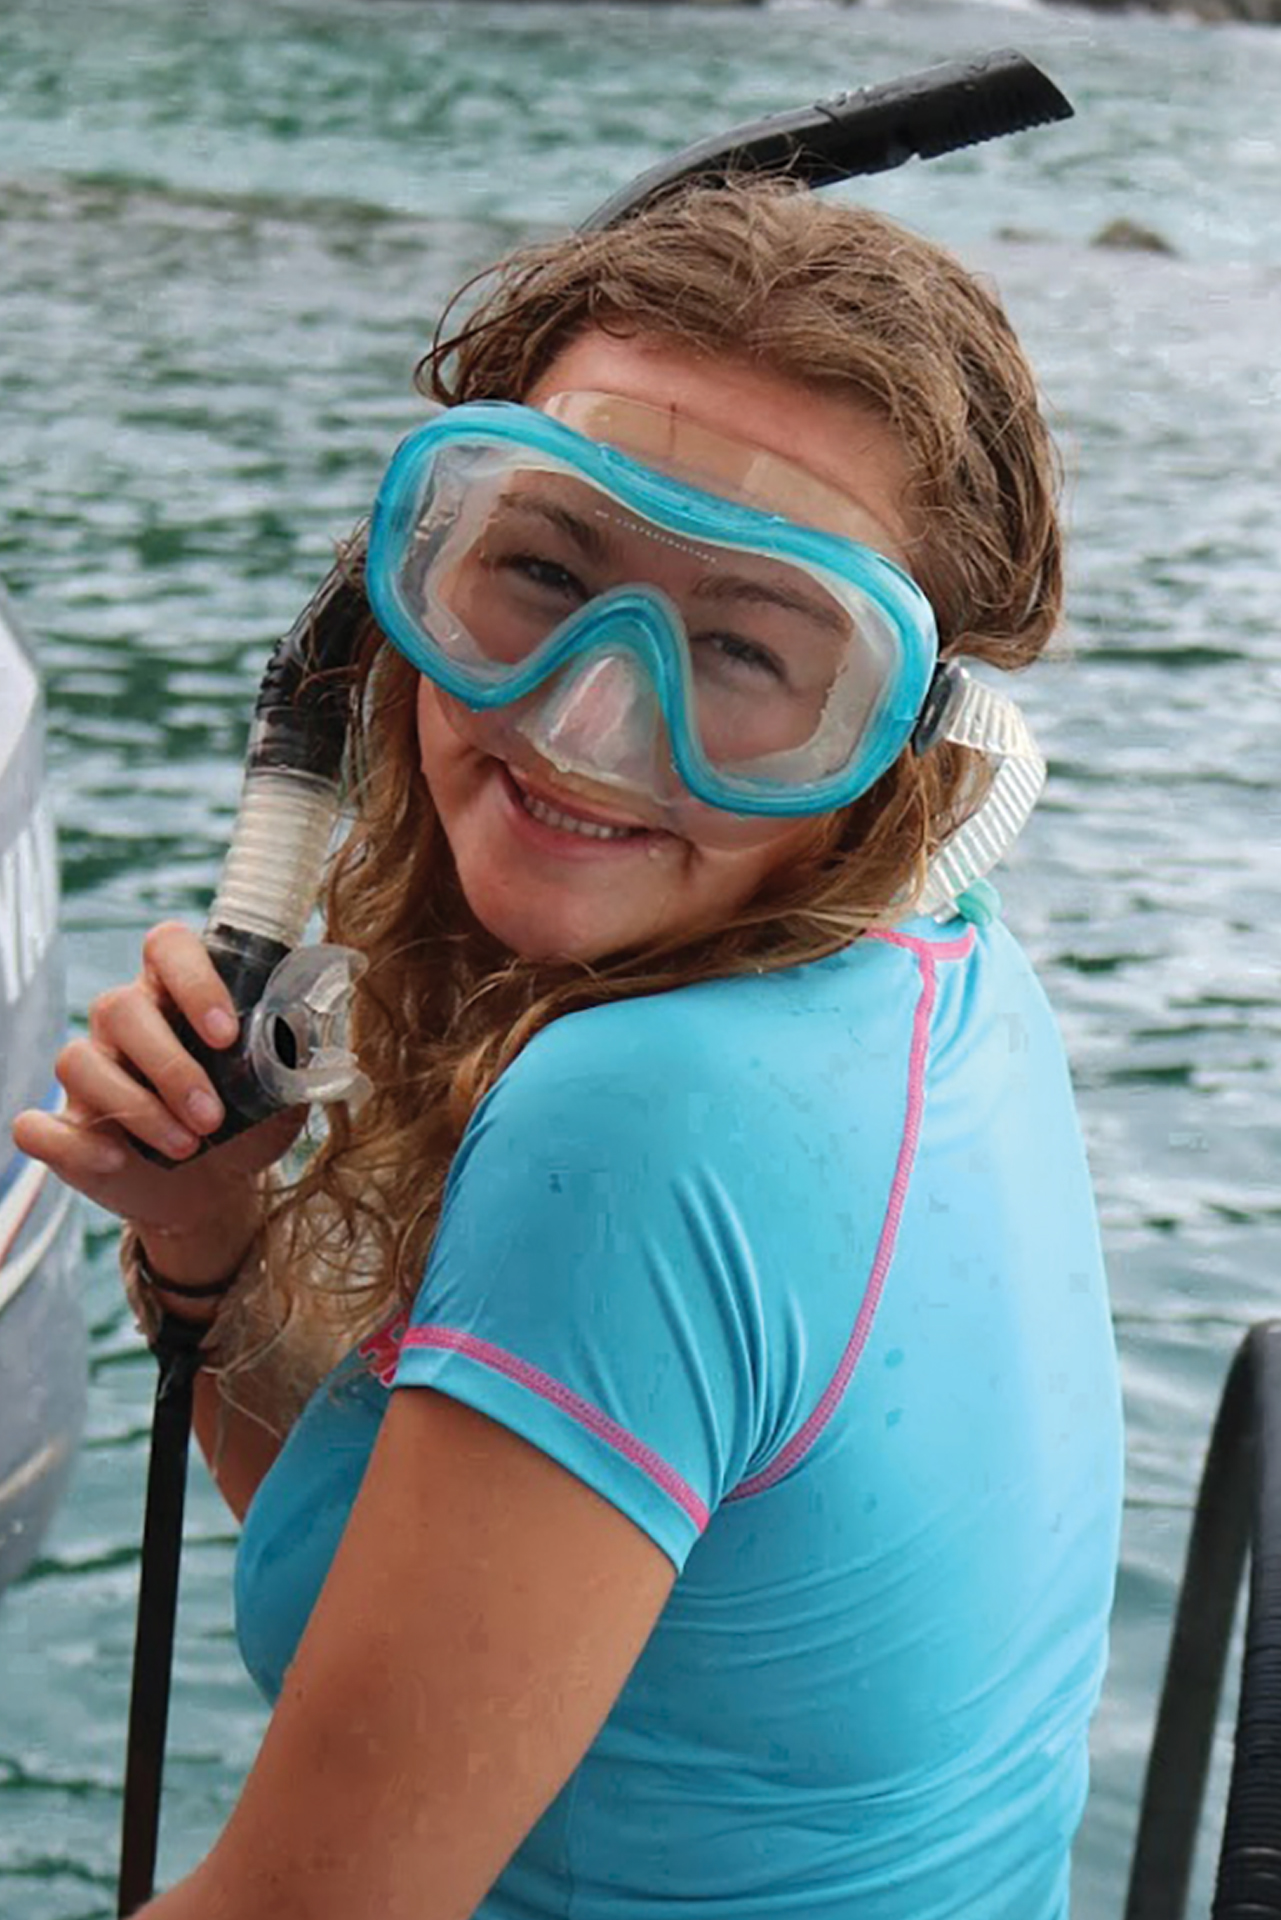 Sydney Hollis snorkling in Costa Rica